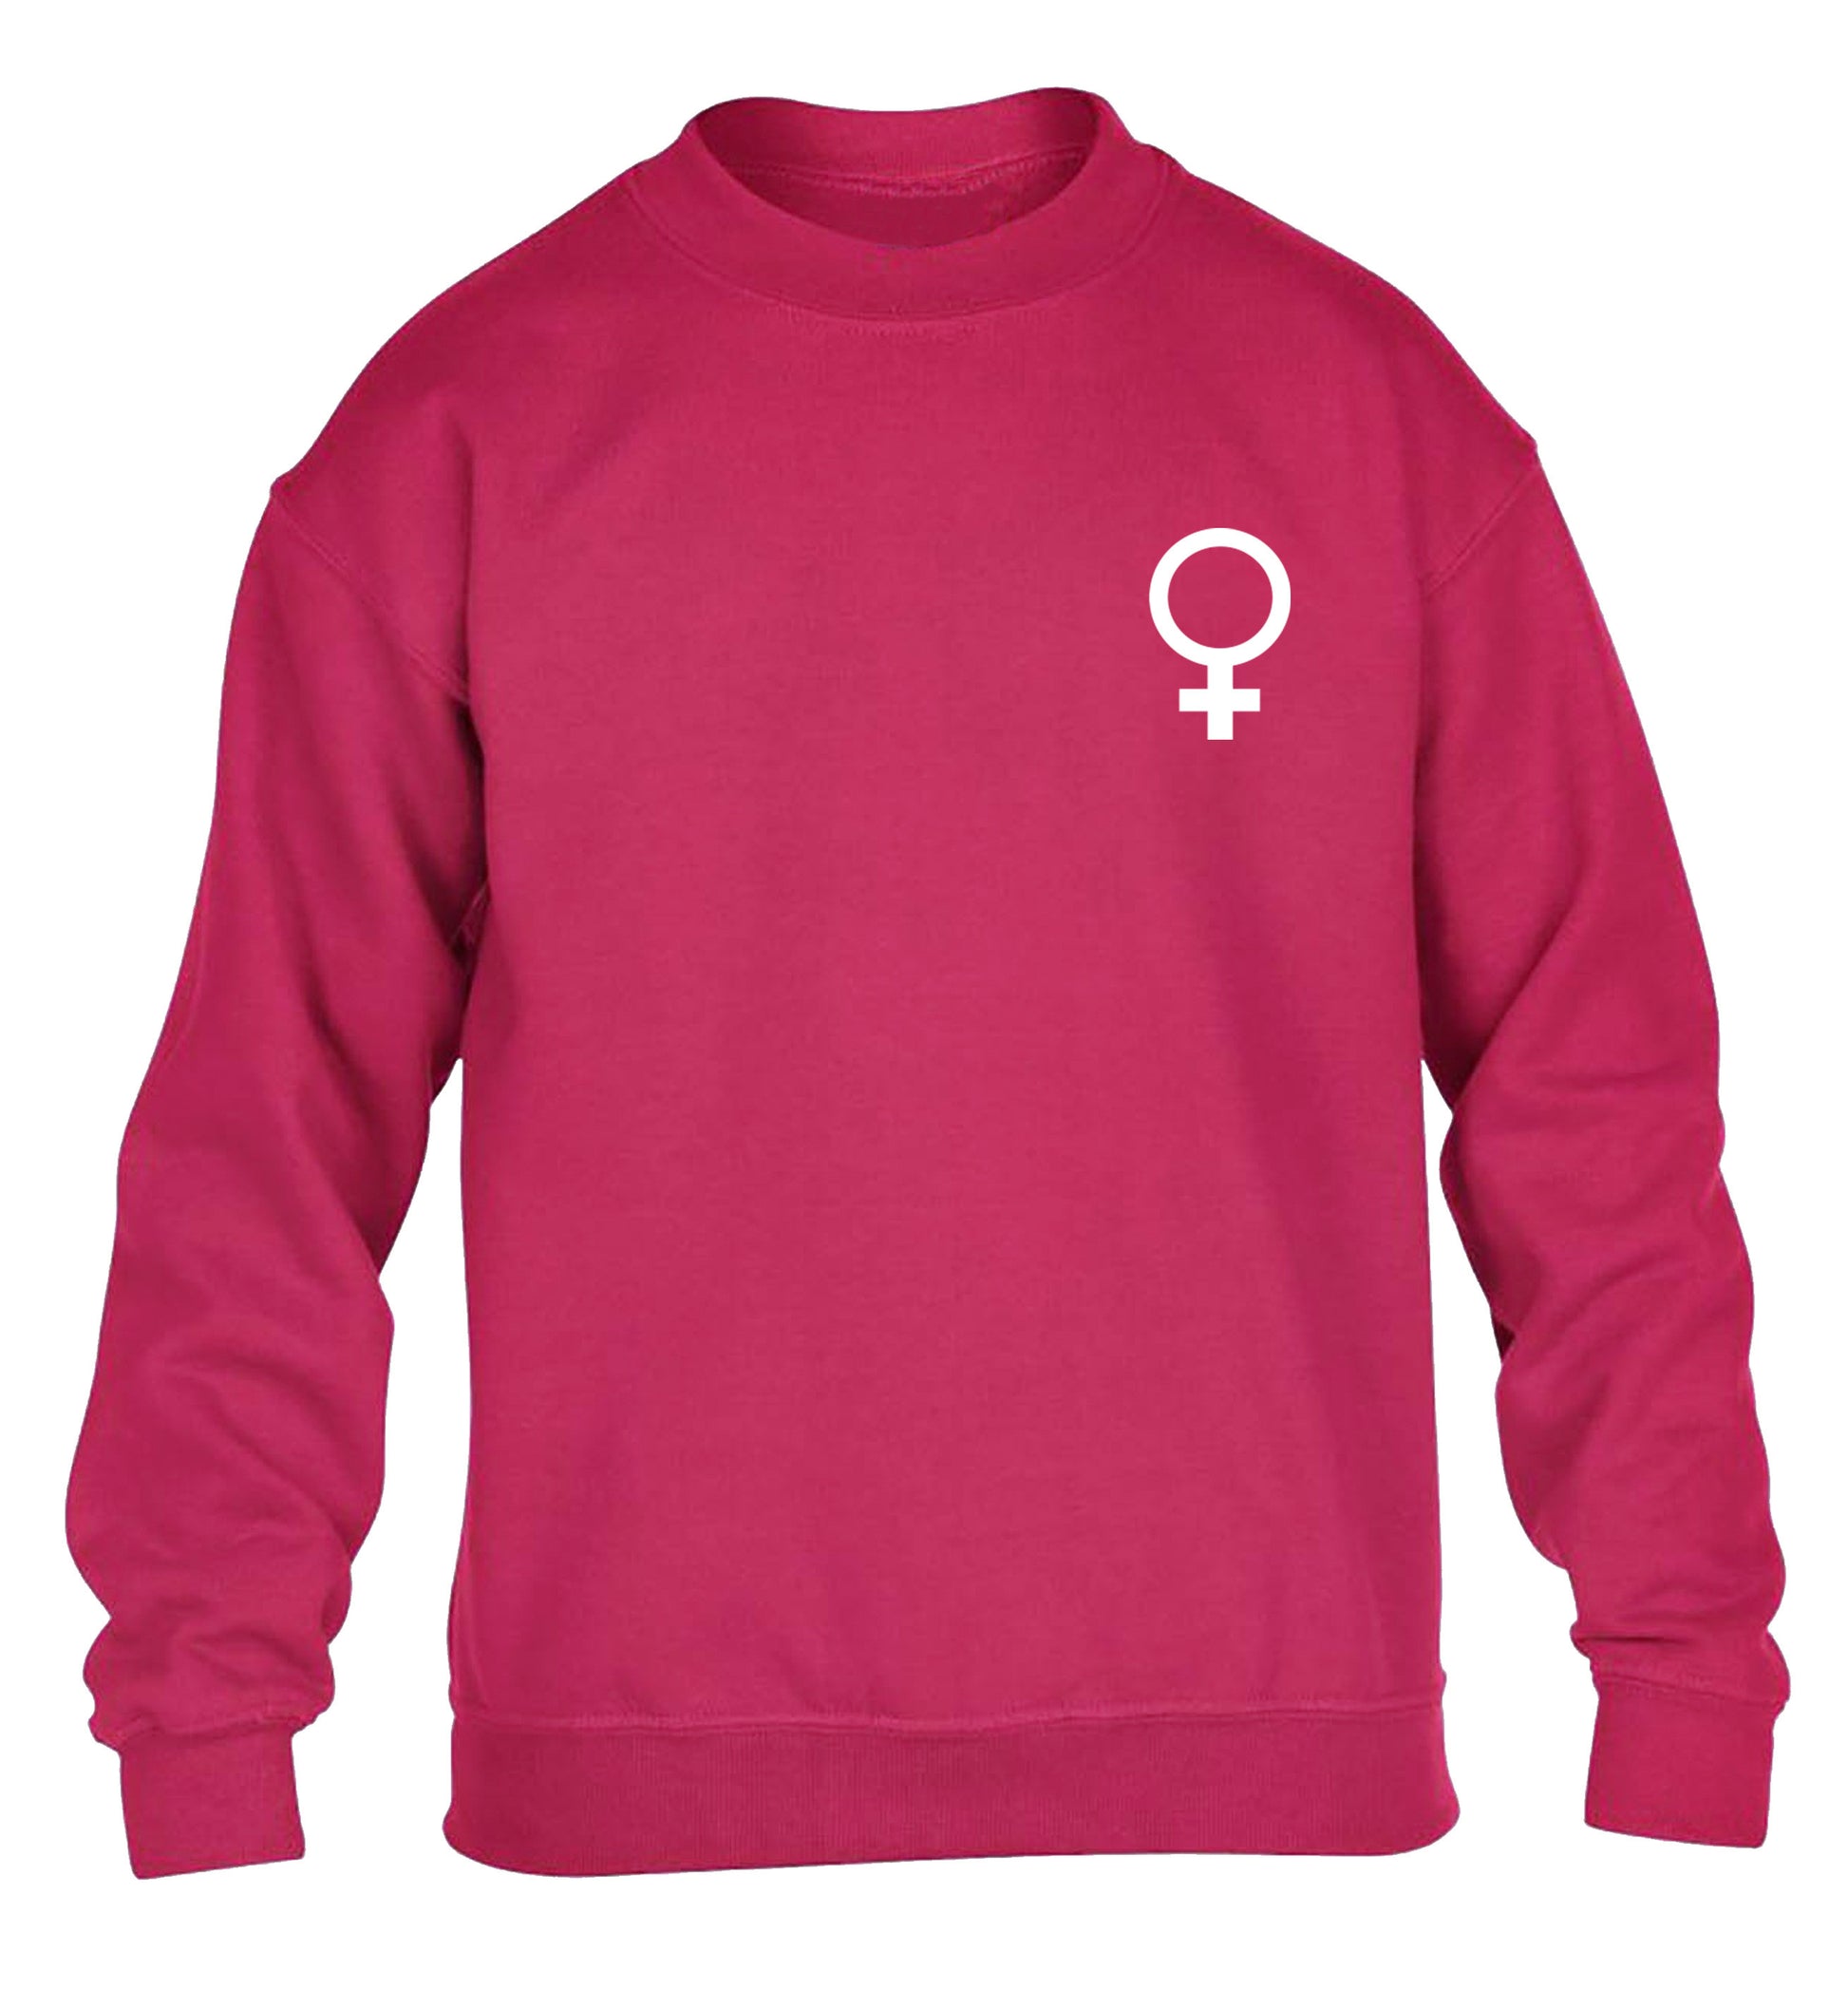 Female pocket symbol children's pink sweater 12-14 Years